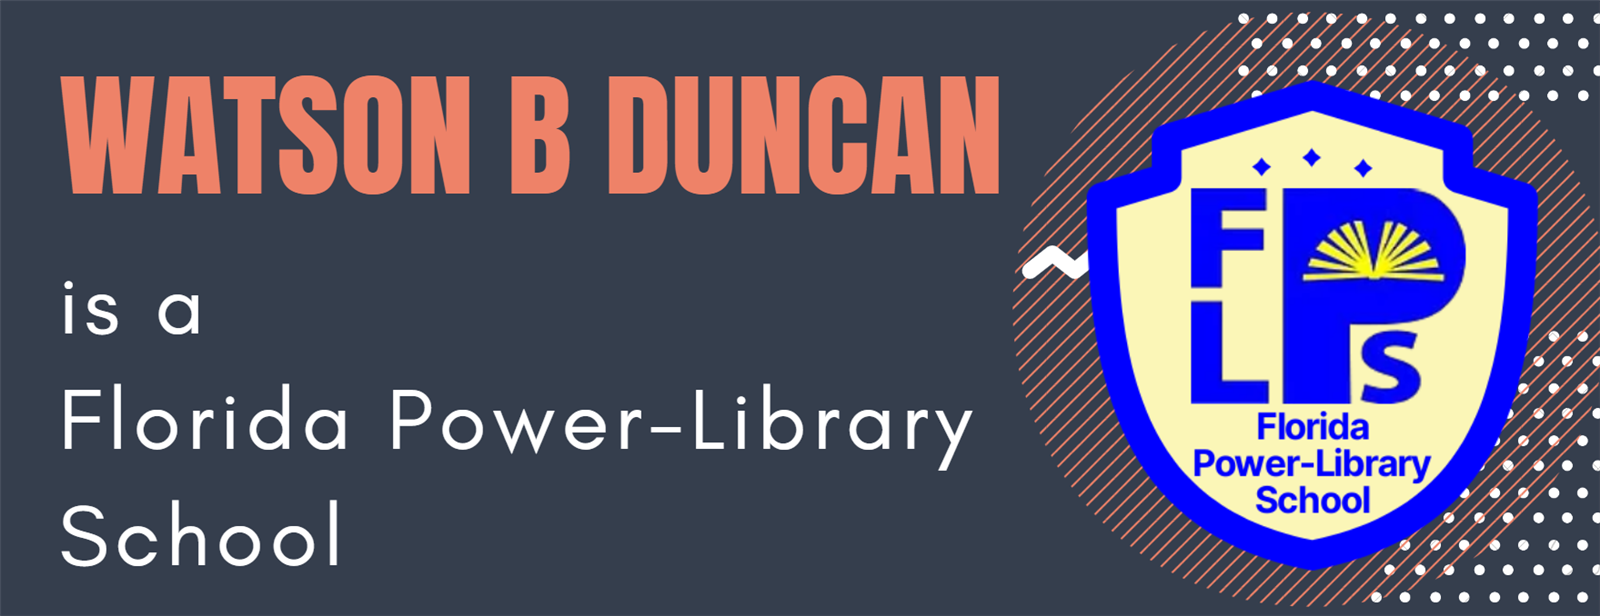 Watson B. Duncan is a Florida Power-Library School